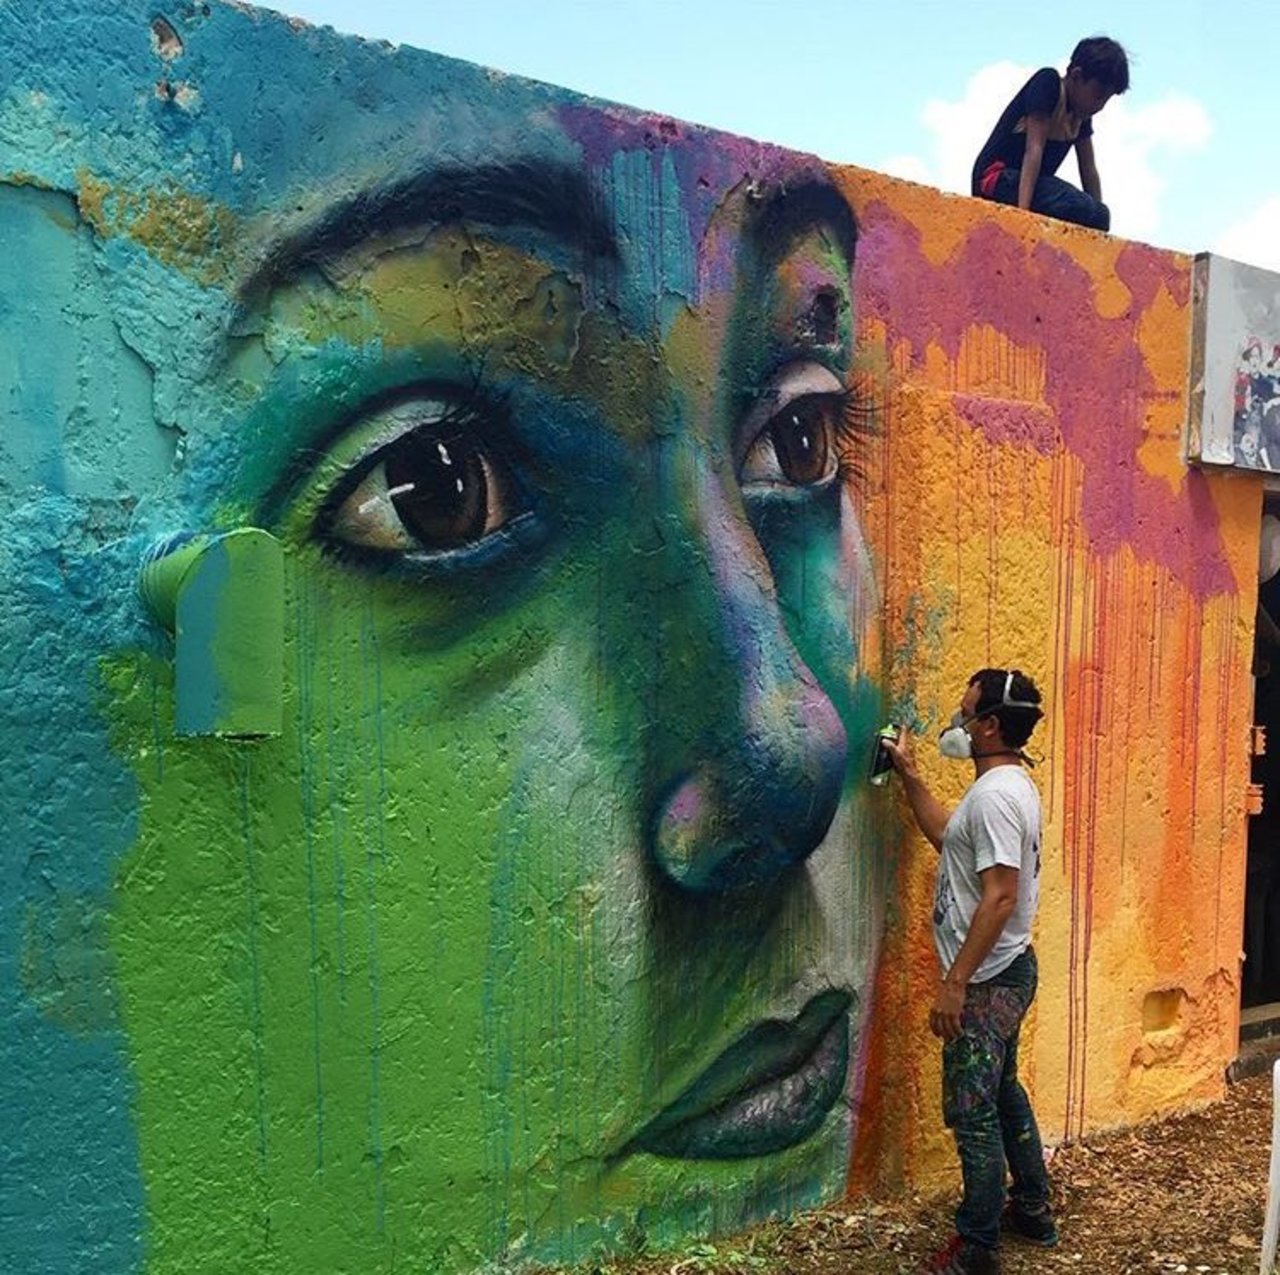 New Street Art • Joel Artista in Israel #art #mural #graffiti #streetart https://t.co/hCsLHfNLKC